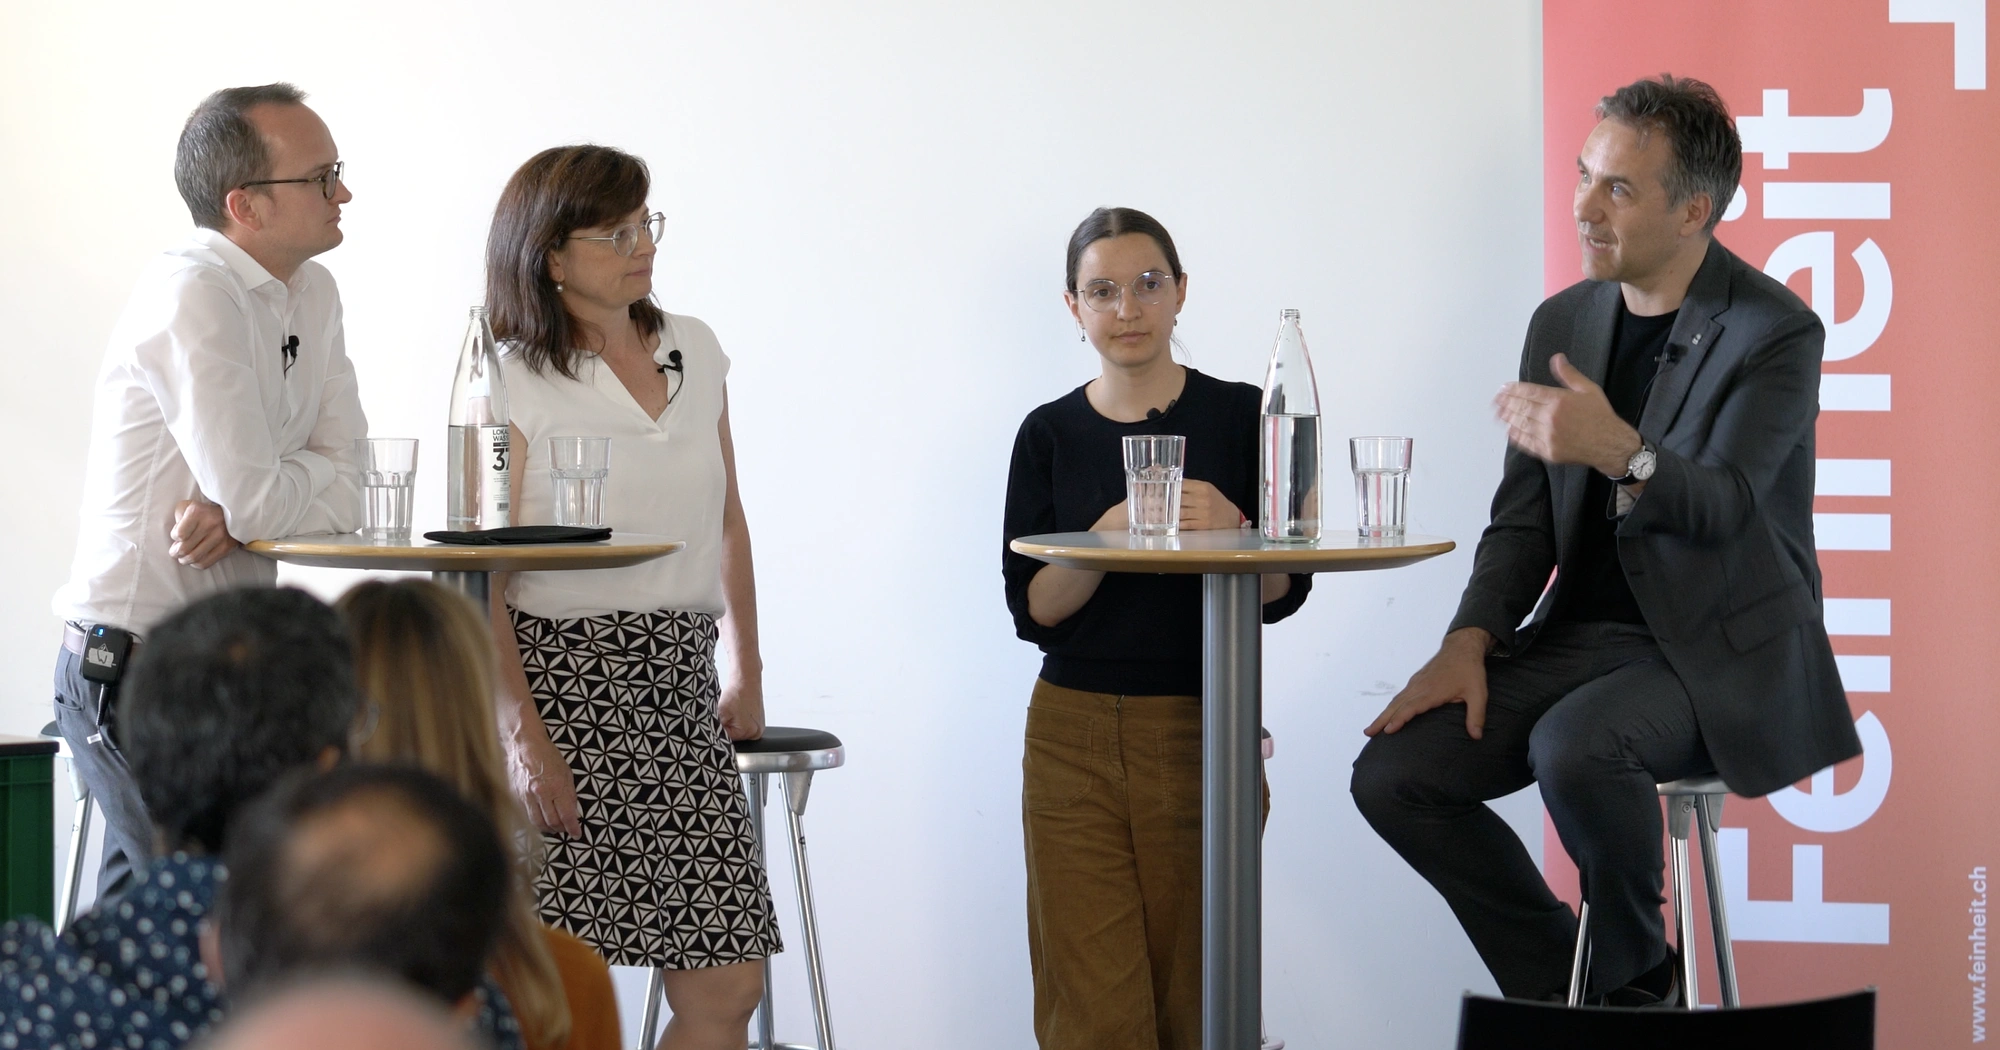 Martin Neukom, Priska Wismer-Felder, Lena Bühler und Thomas Vellacott am diskutieren.